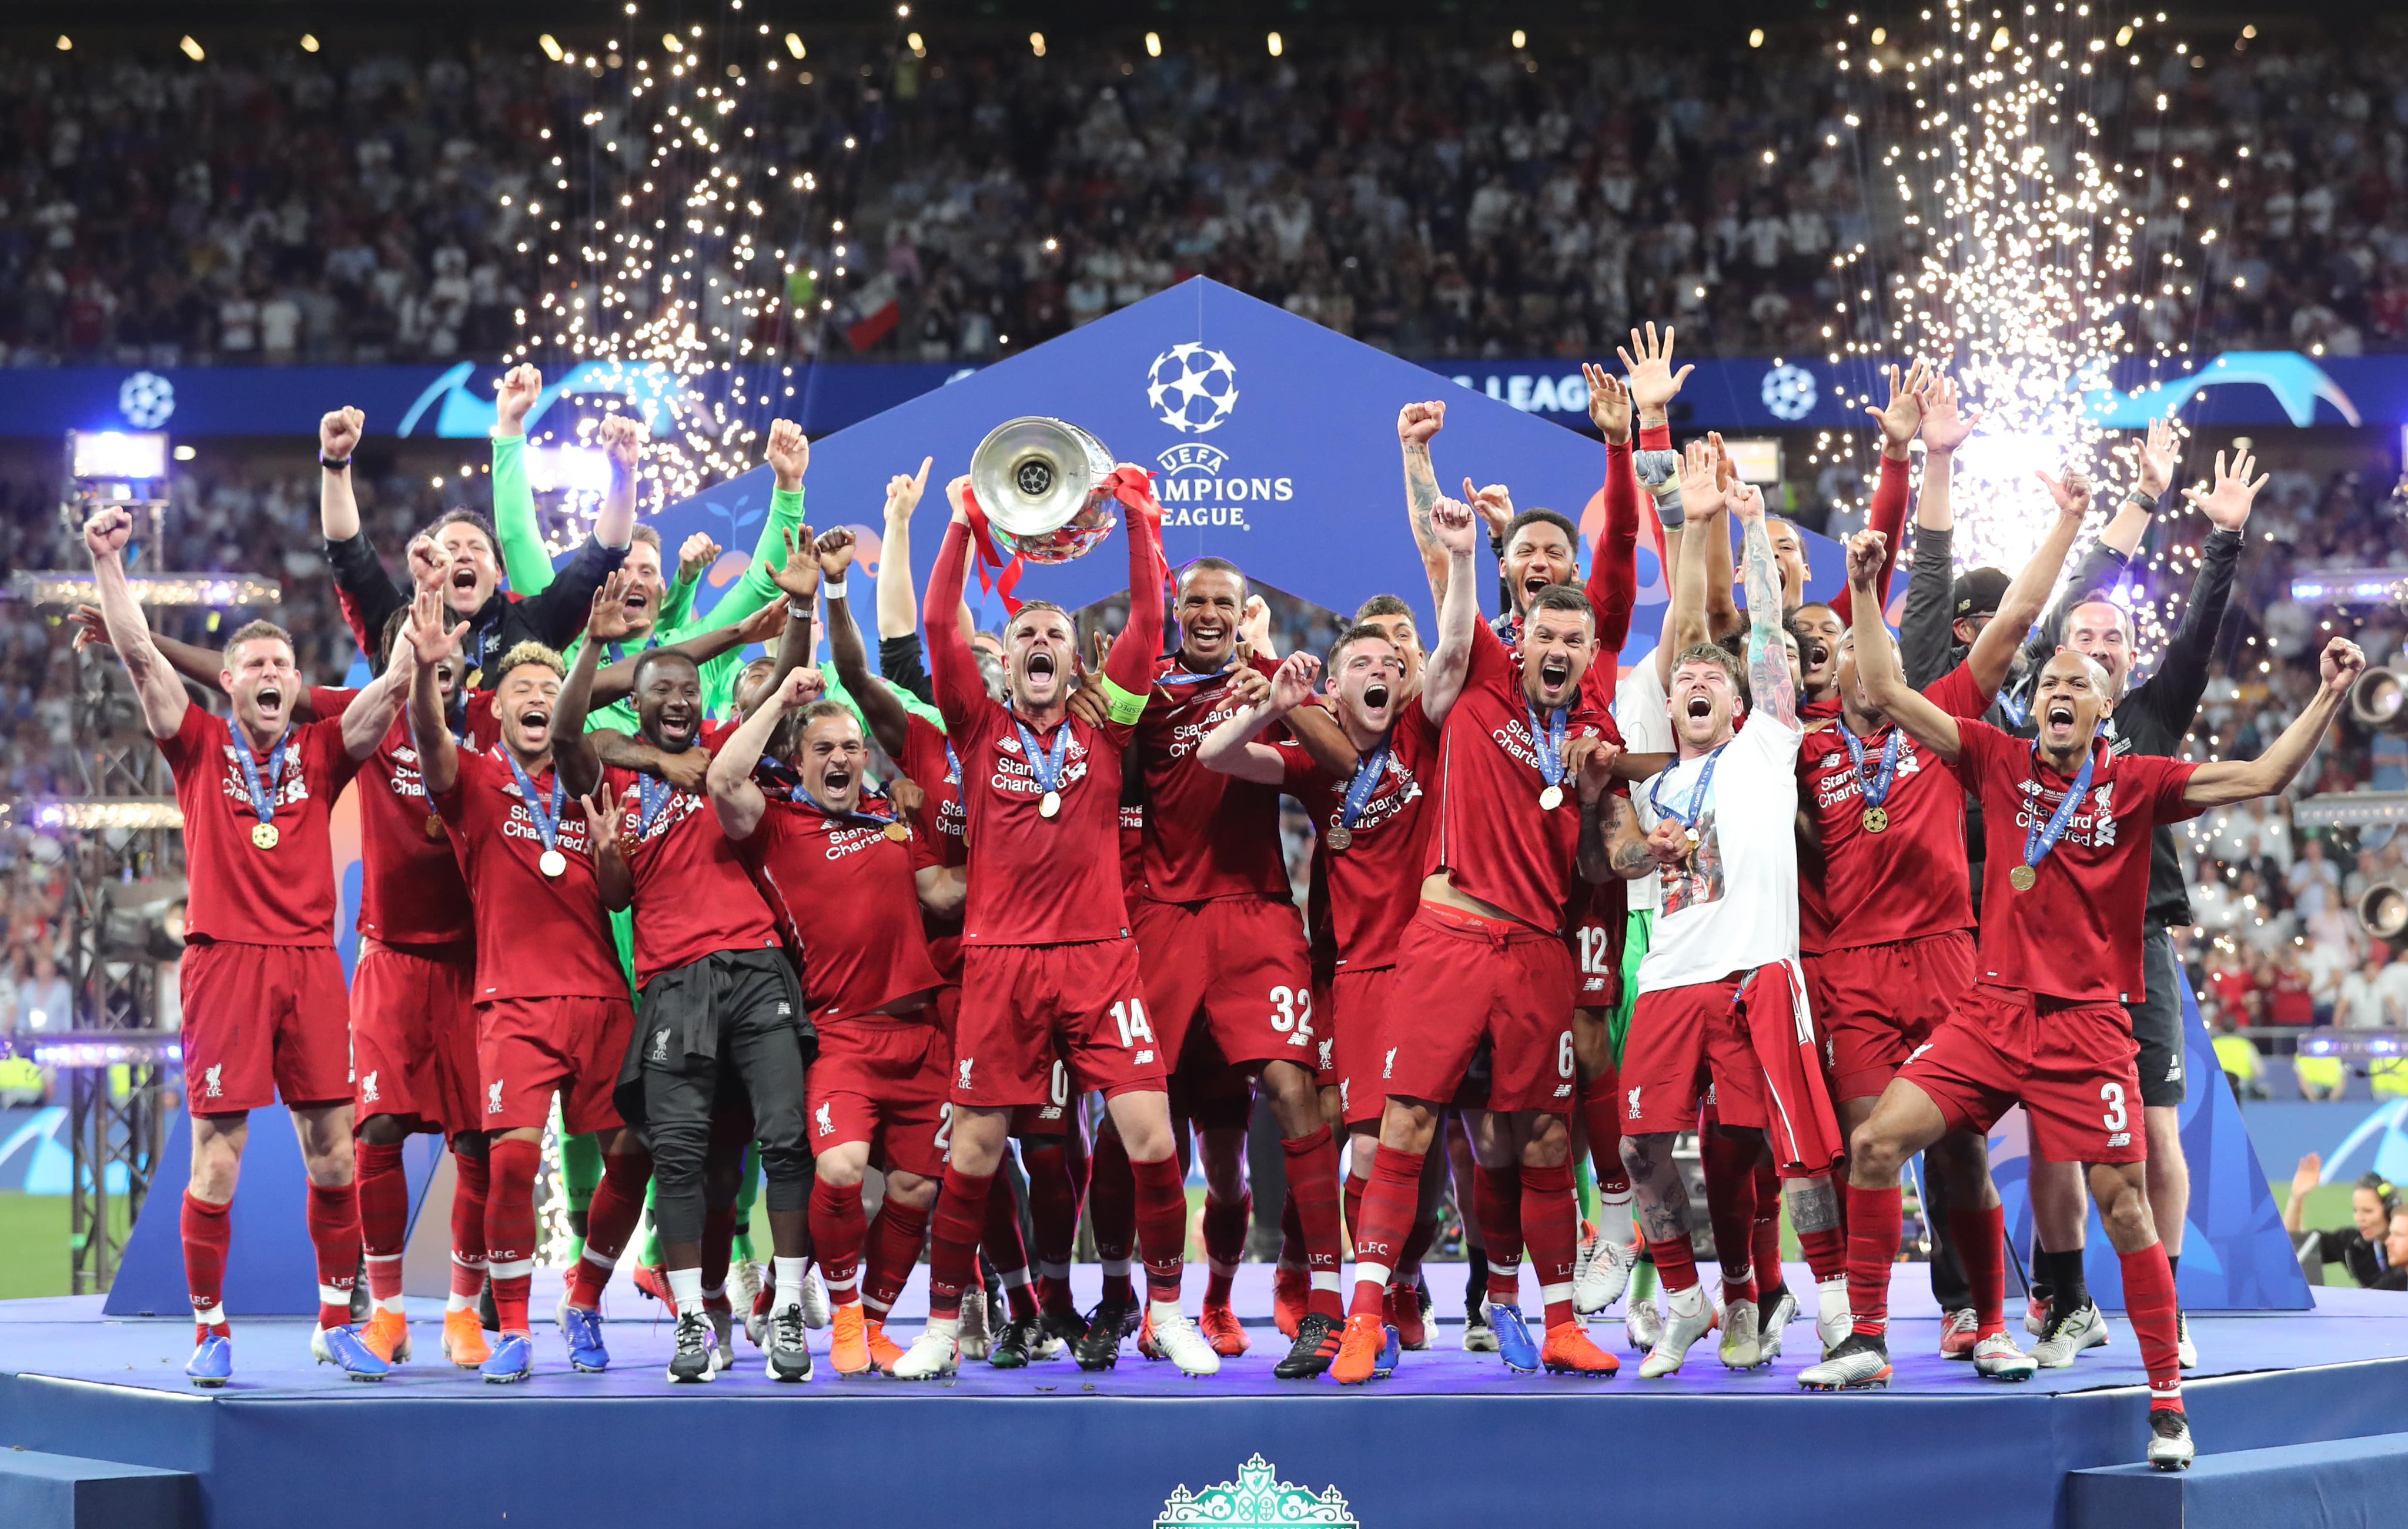 🏆 UEFA CHAMPIONS LEAGUE WINNERS 2018